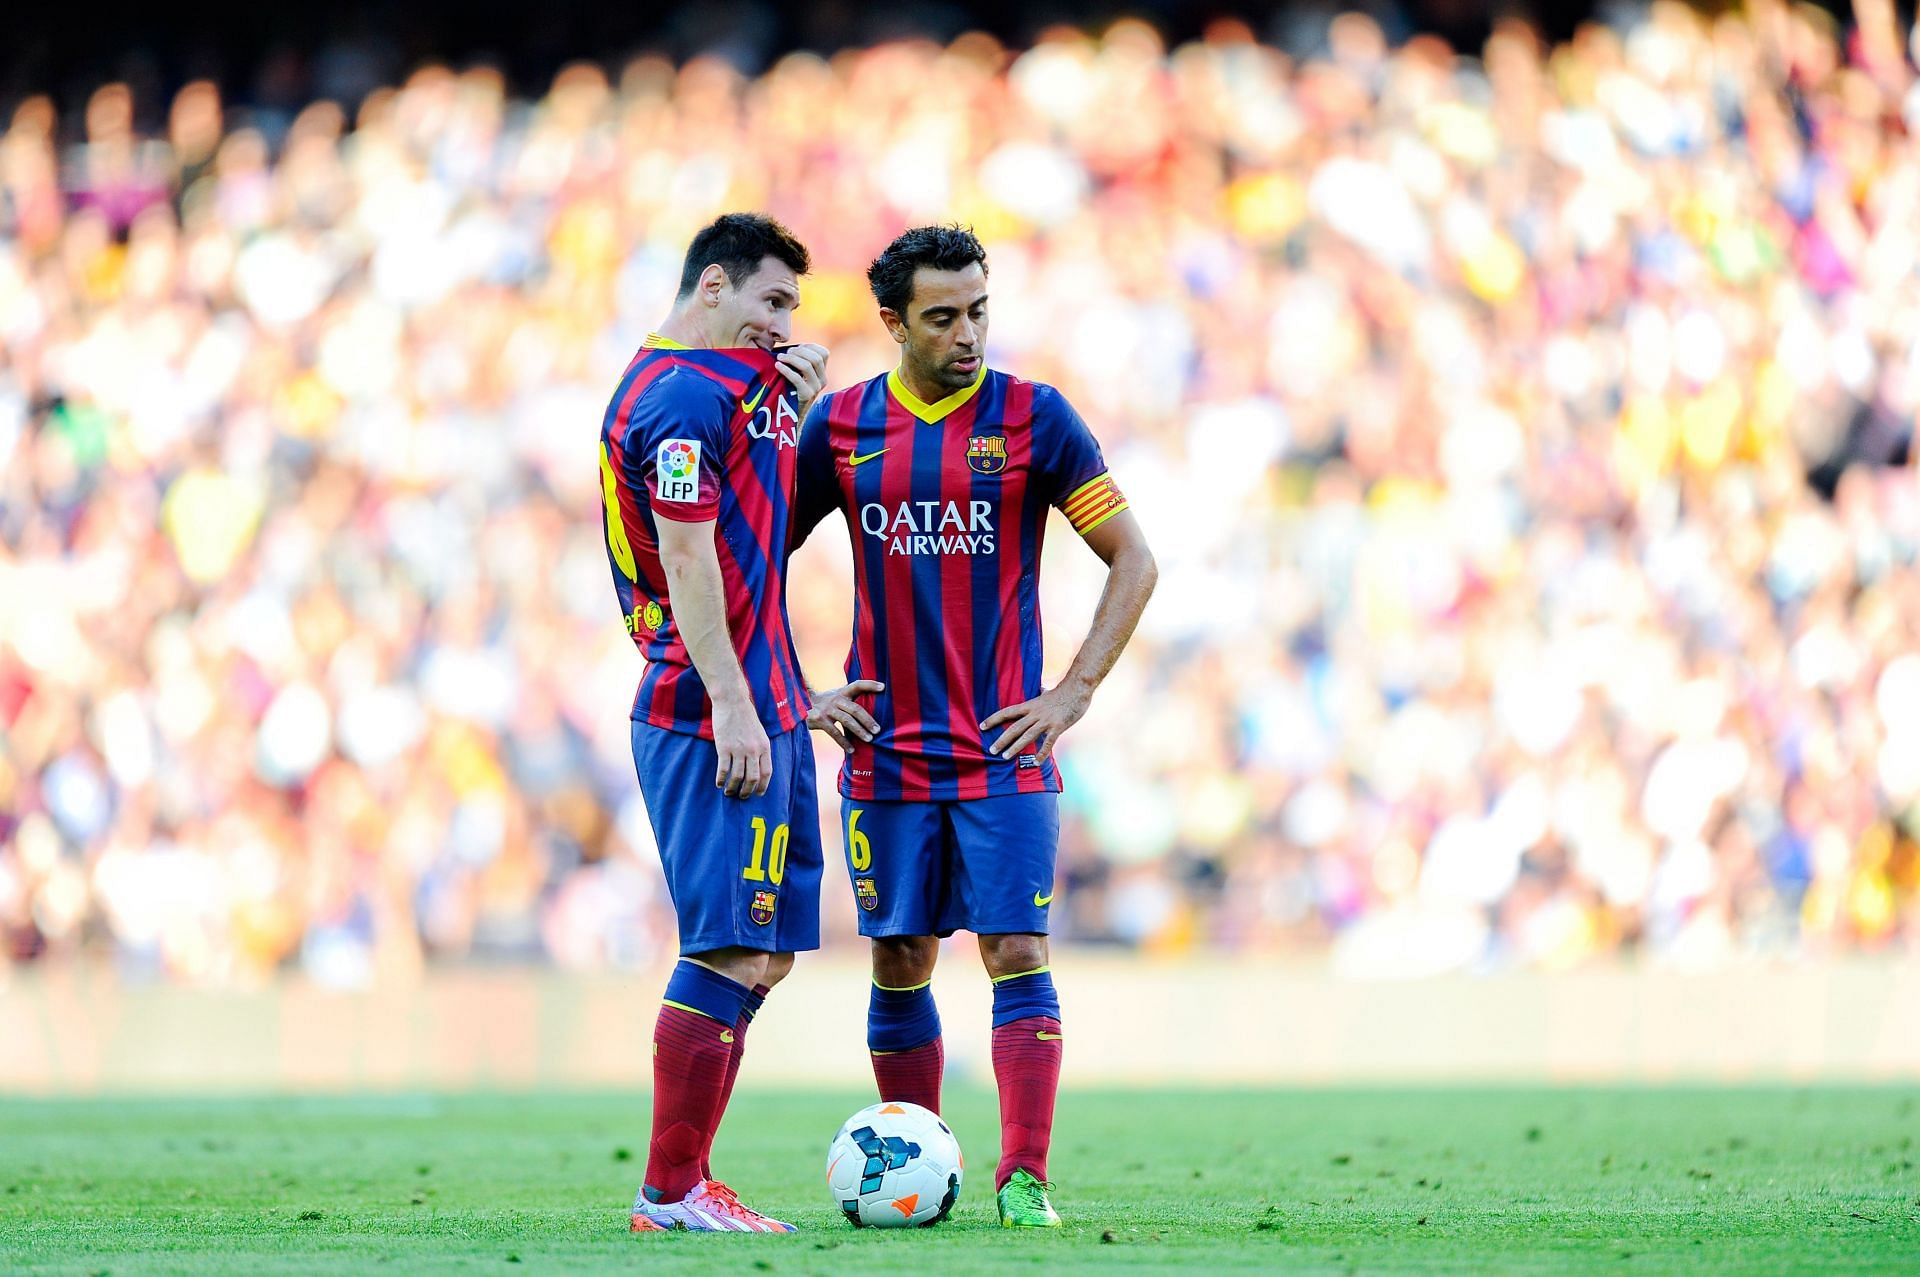 Xavi and Messi were teammates at FC Barcelona